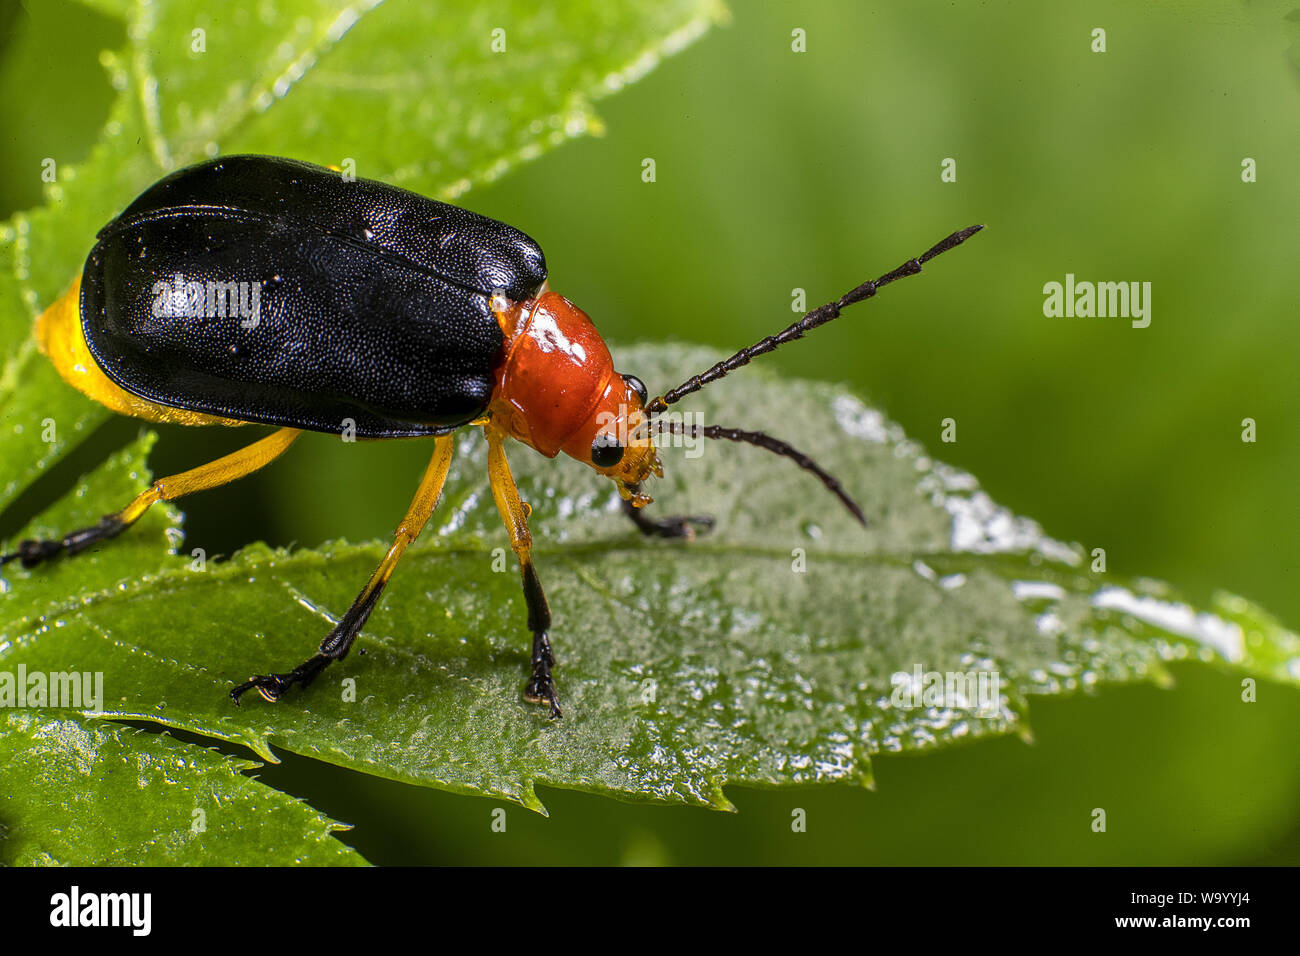 The beetle Stock Photo